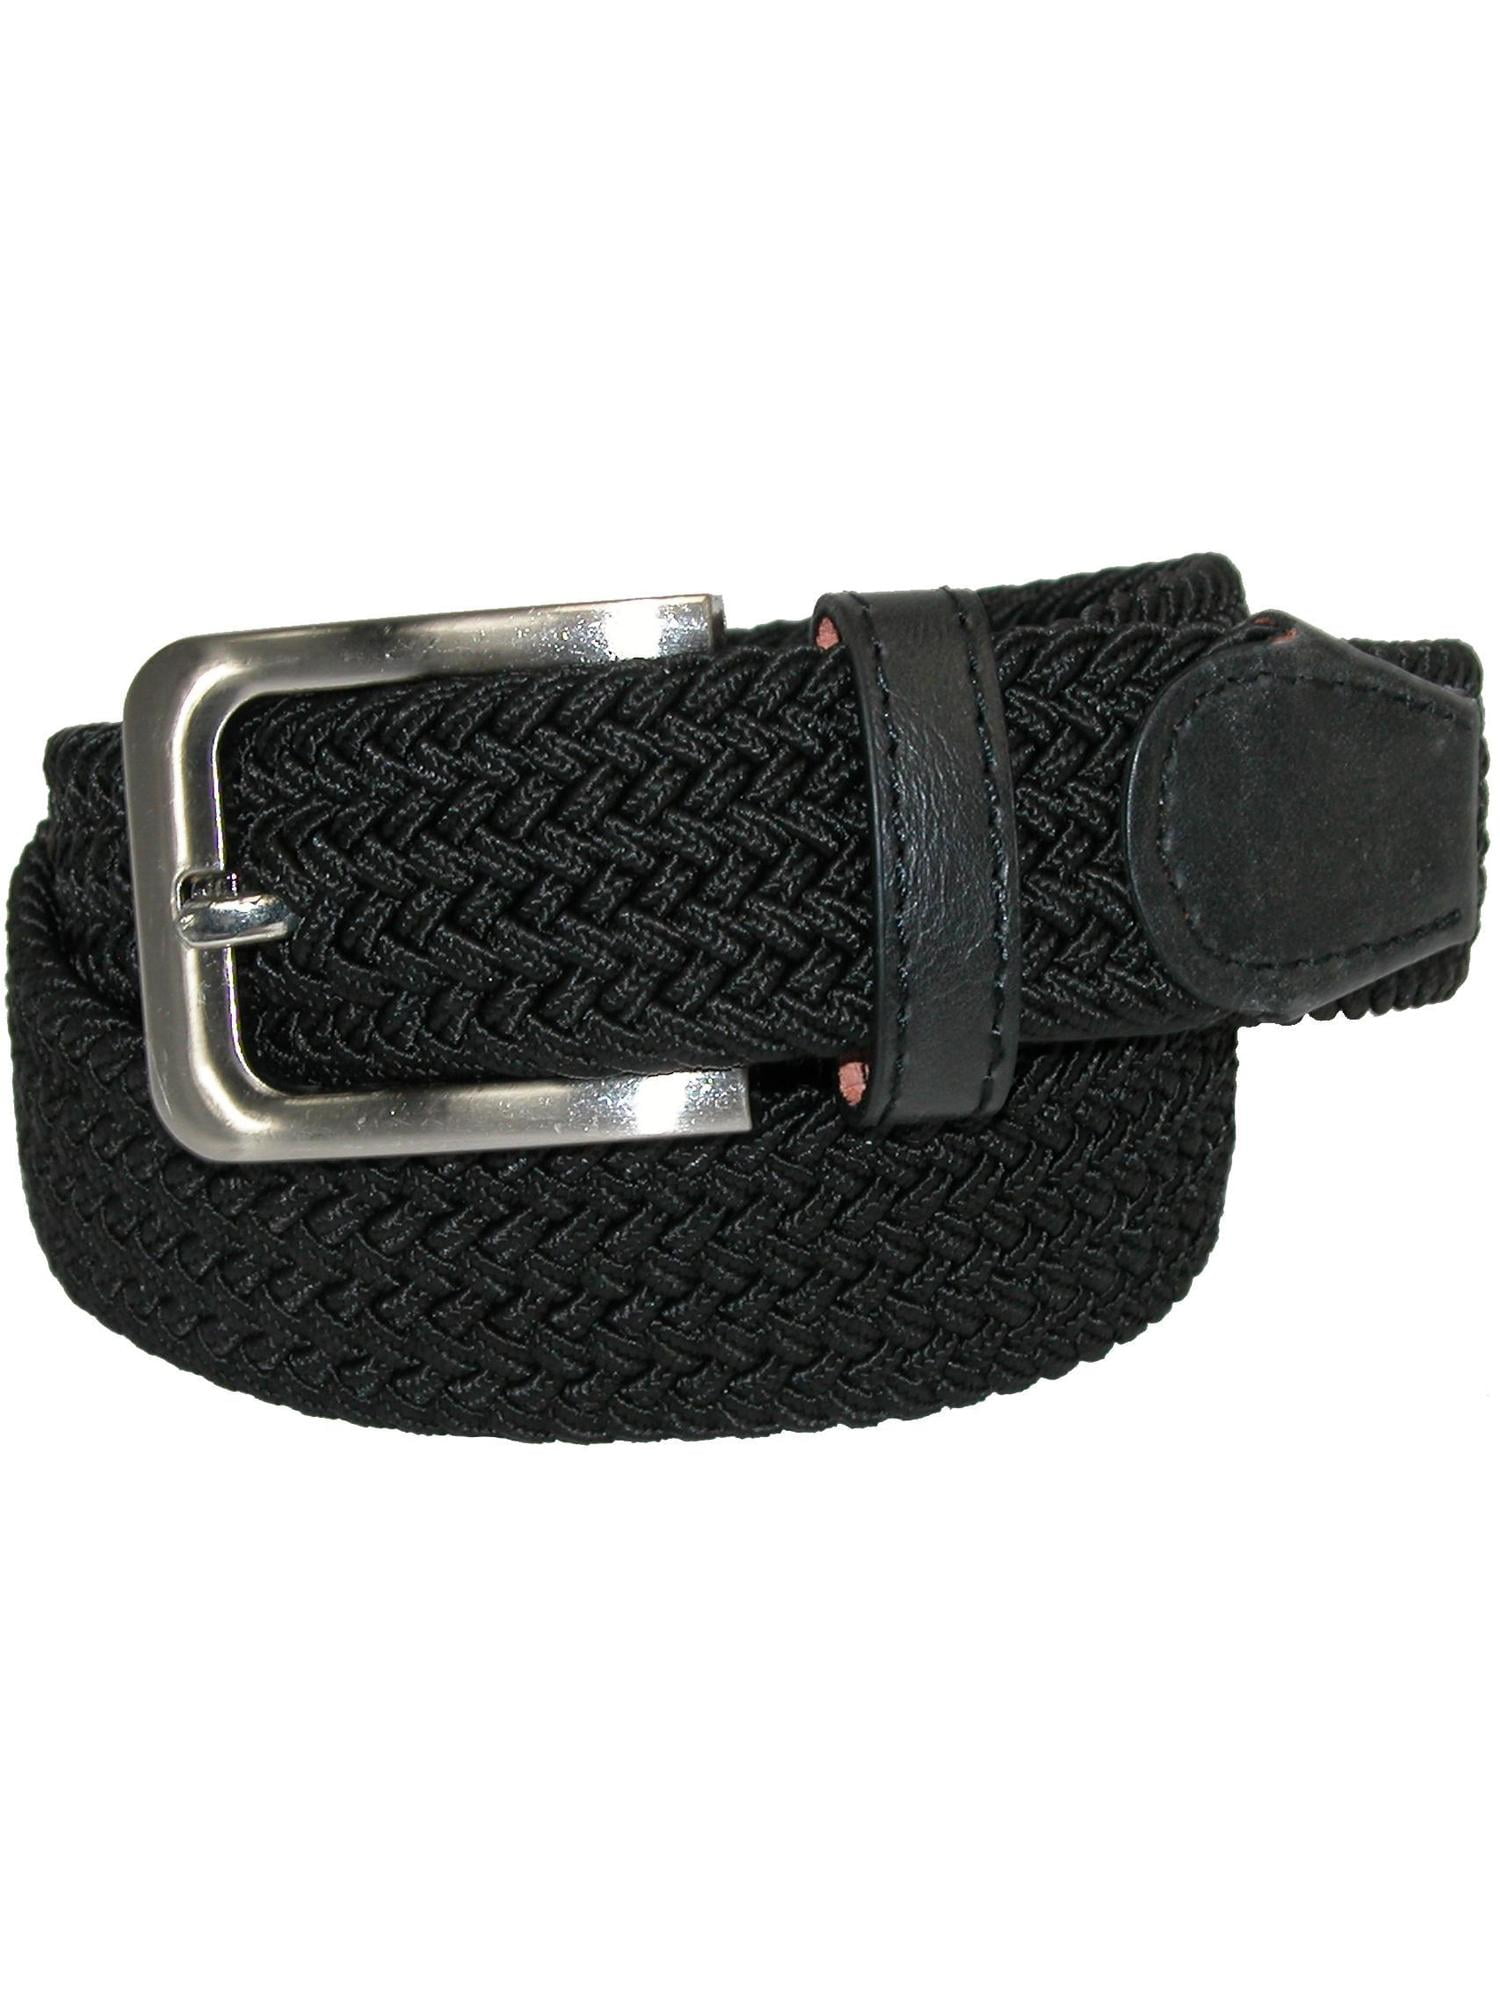 Men's Elastic Braided Stretch Belt with Silver Buckle - Walmart.com